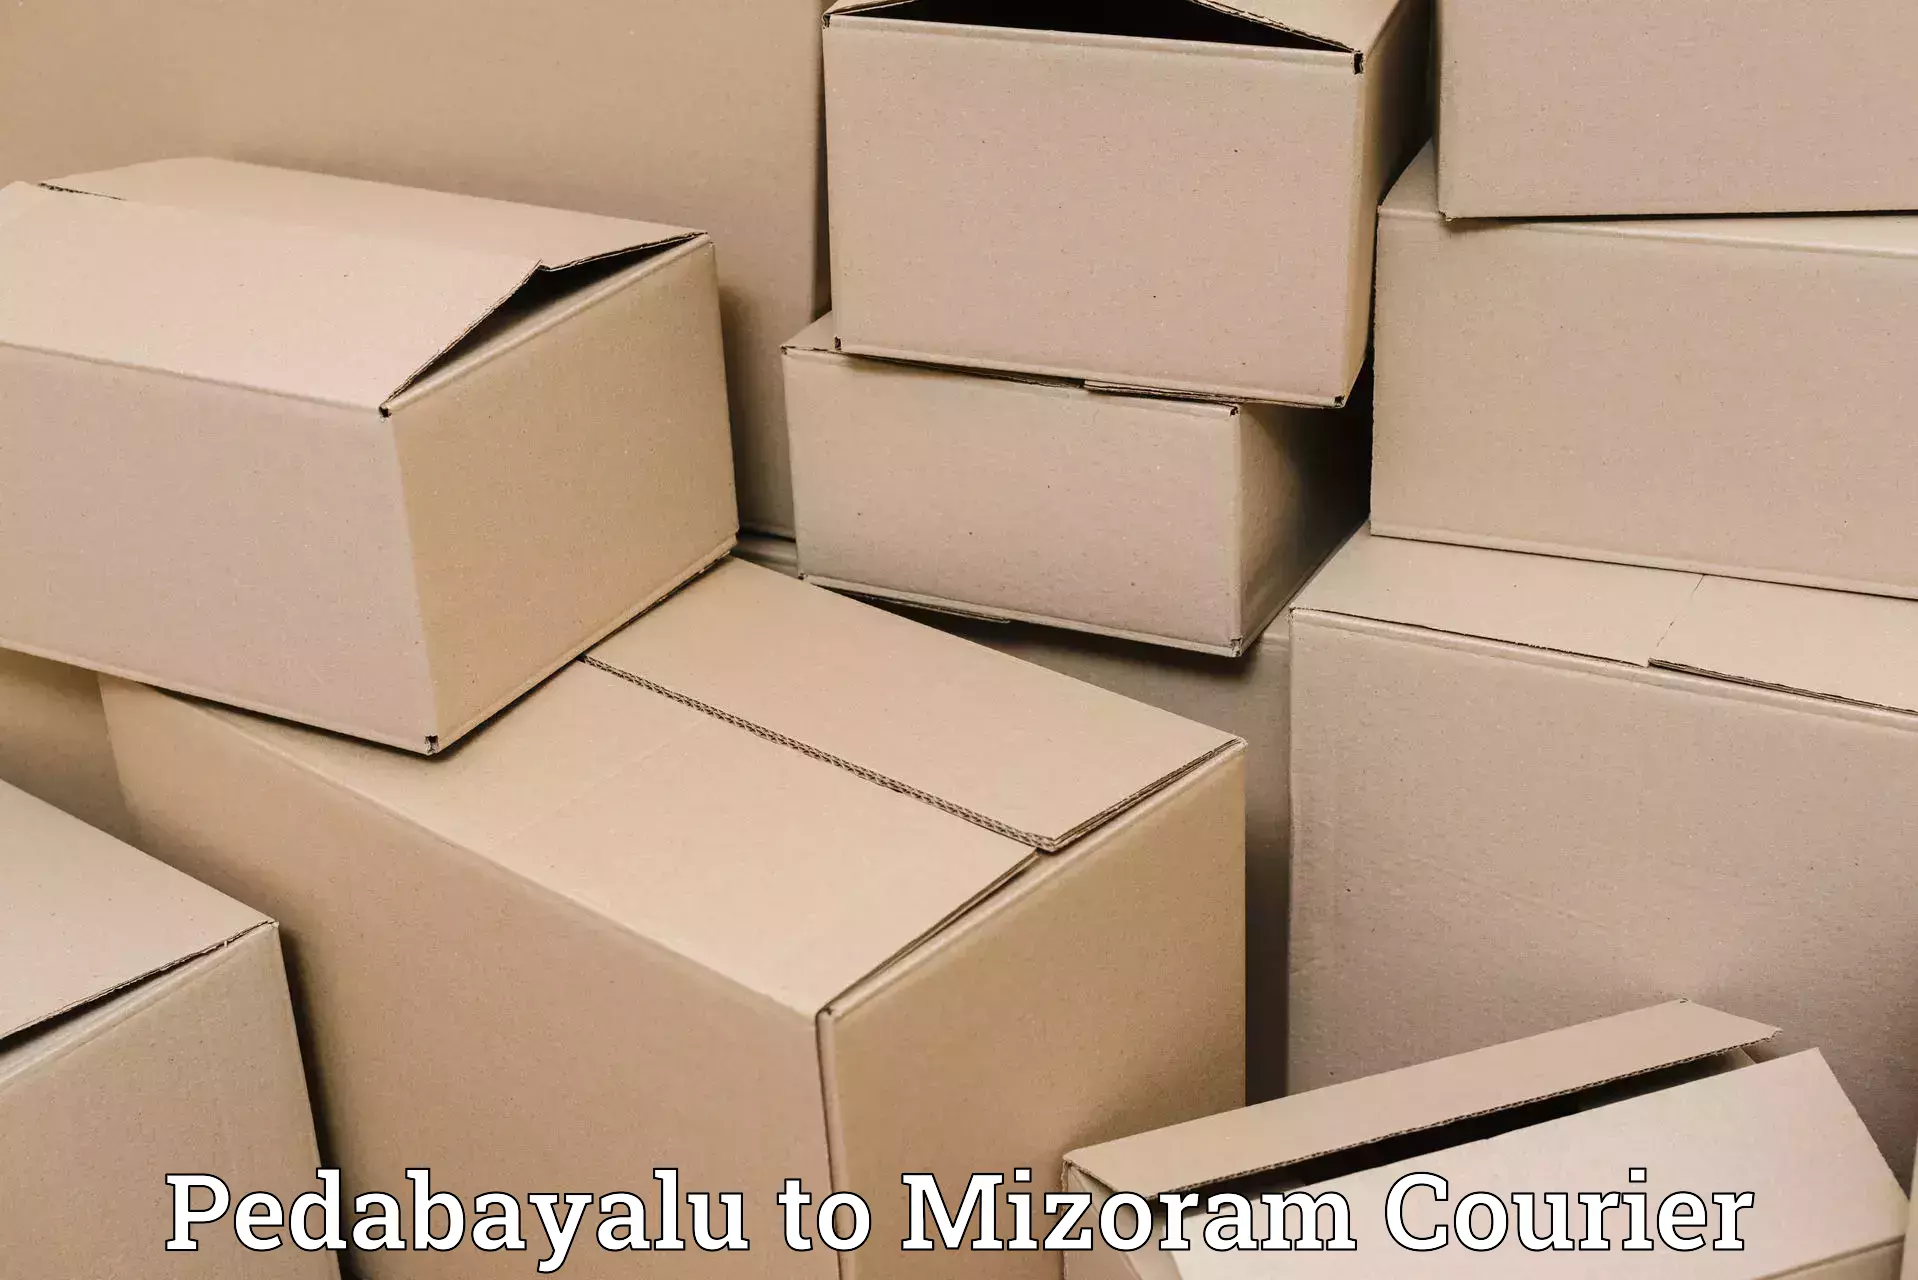 Full-service courier options Pedabayalu to Mizoram